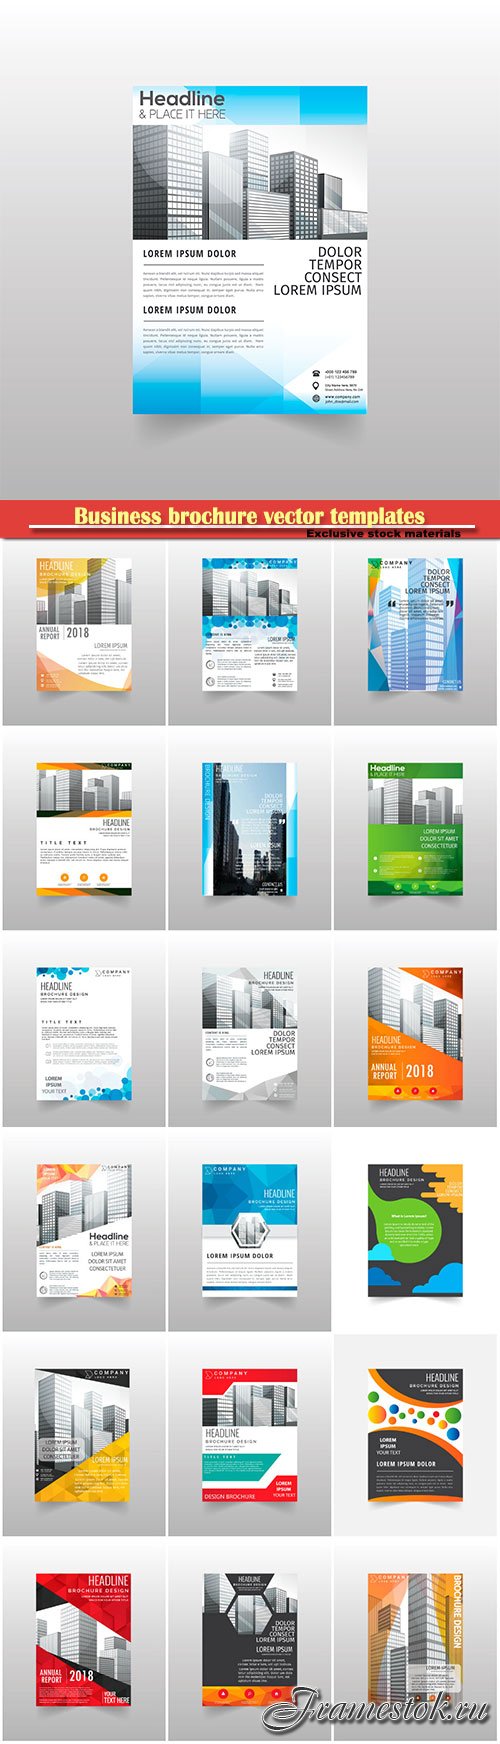 Business brochure vector templates, magazine cover, business mockup, education, presentation, report # 65